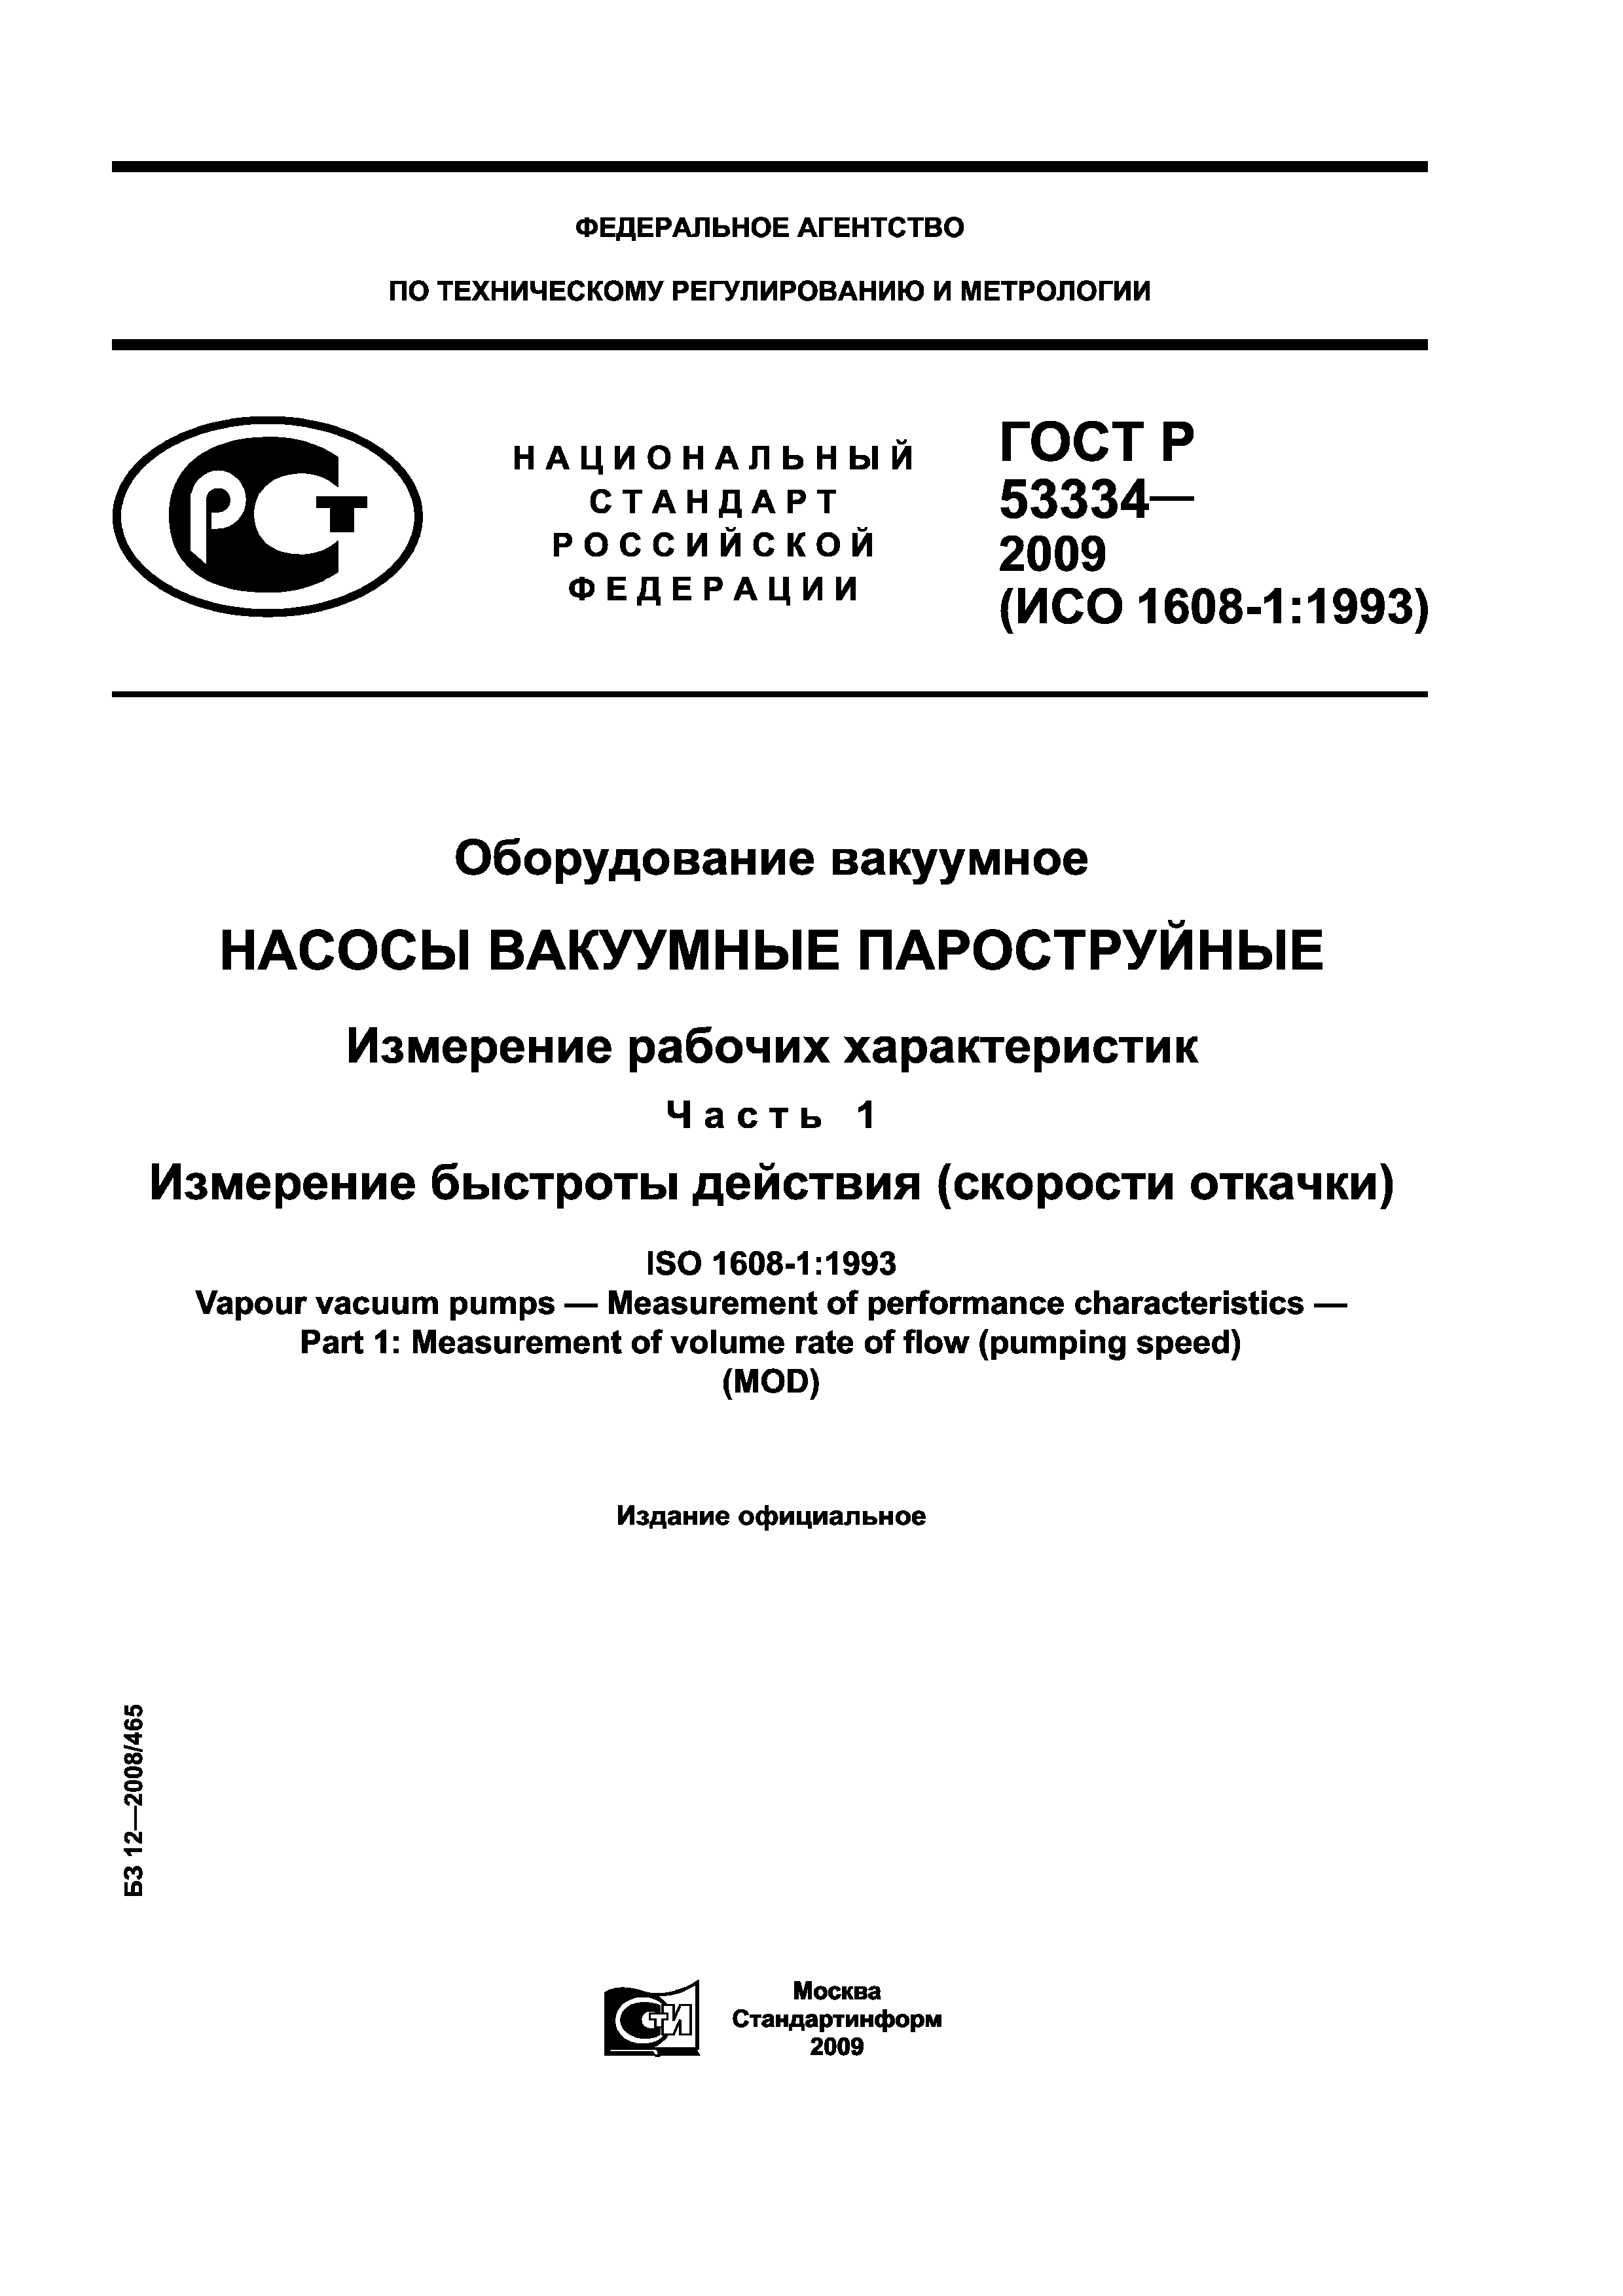 ГОСТ Р 53334-2009